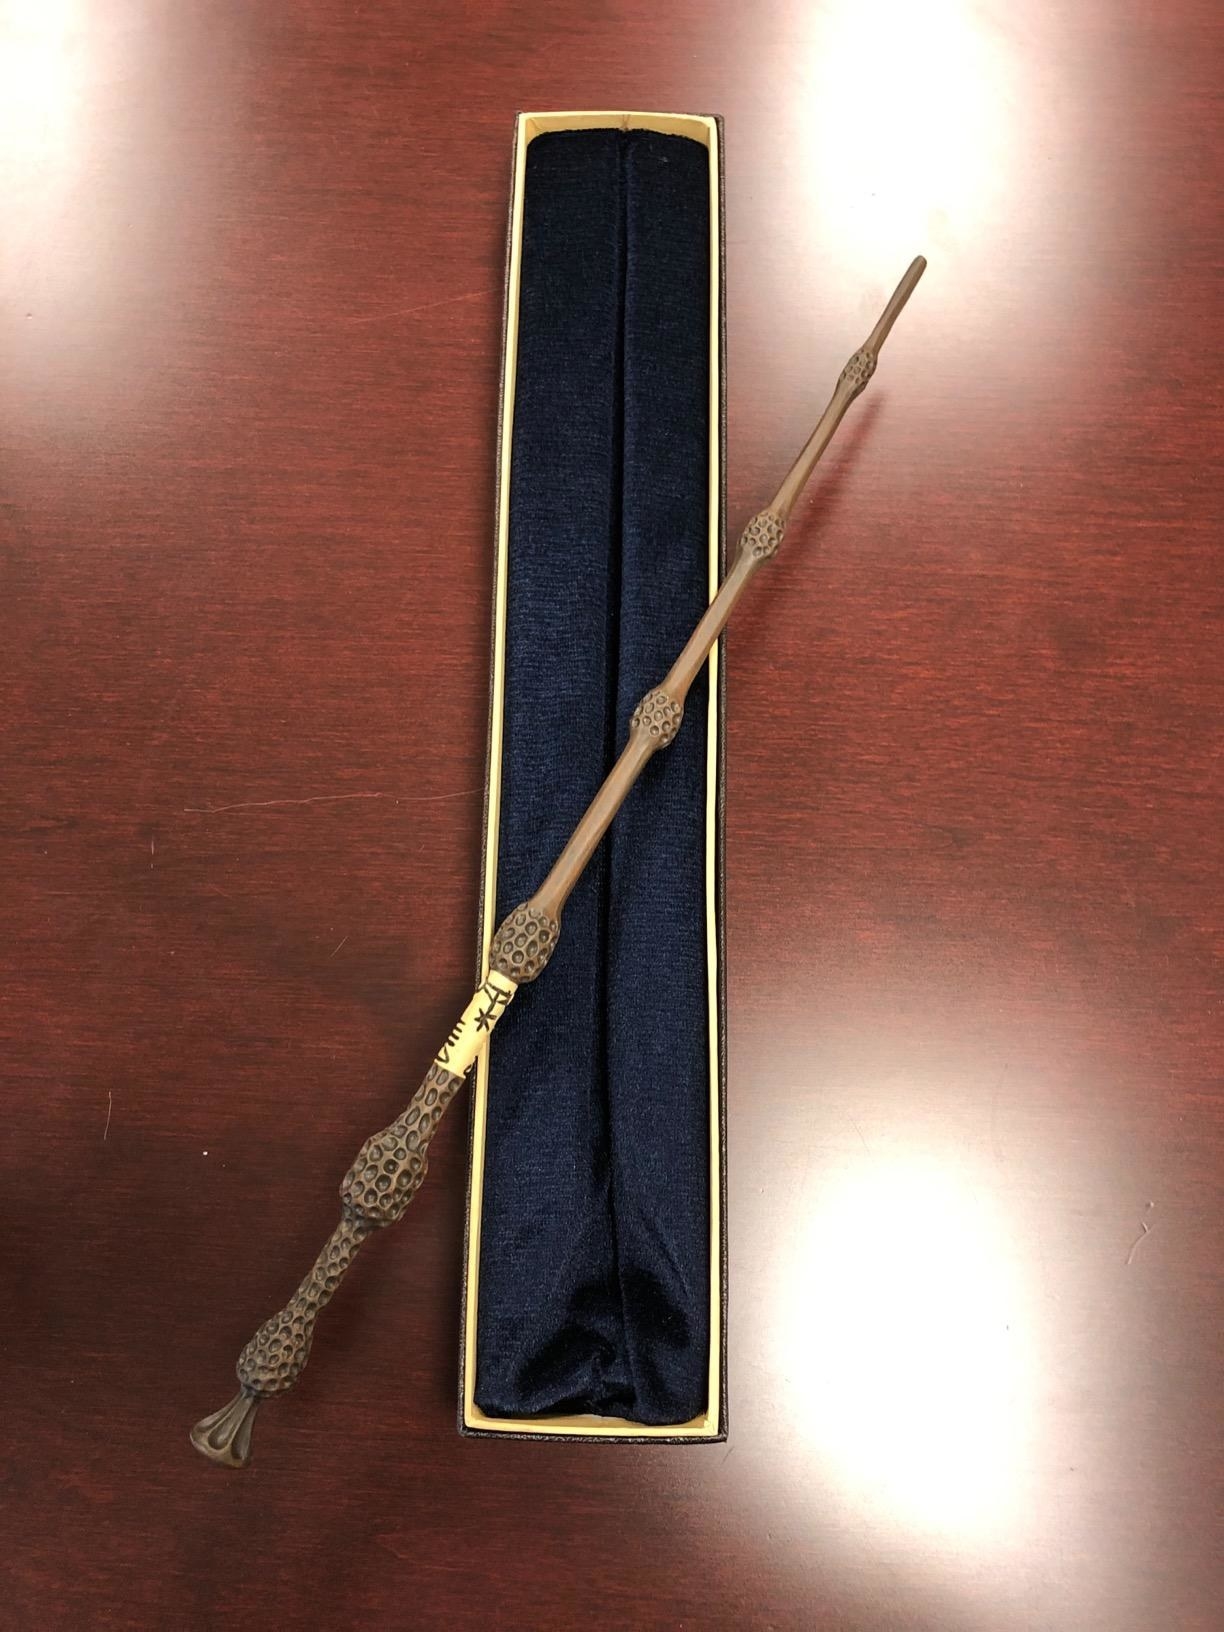 reviewer image of a jimmyfun magic wand and its case